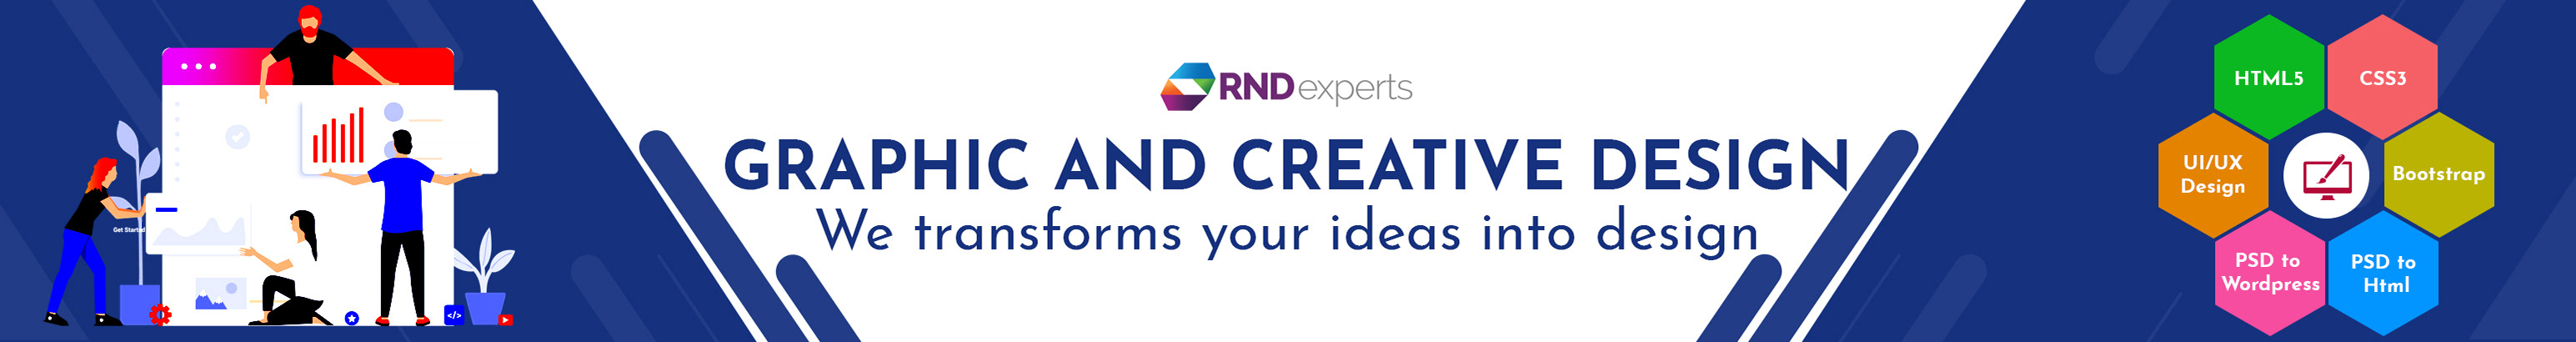 RND Experts's profile banner